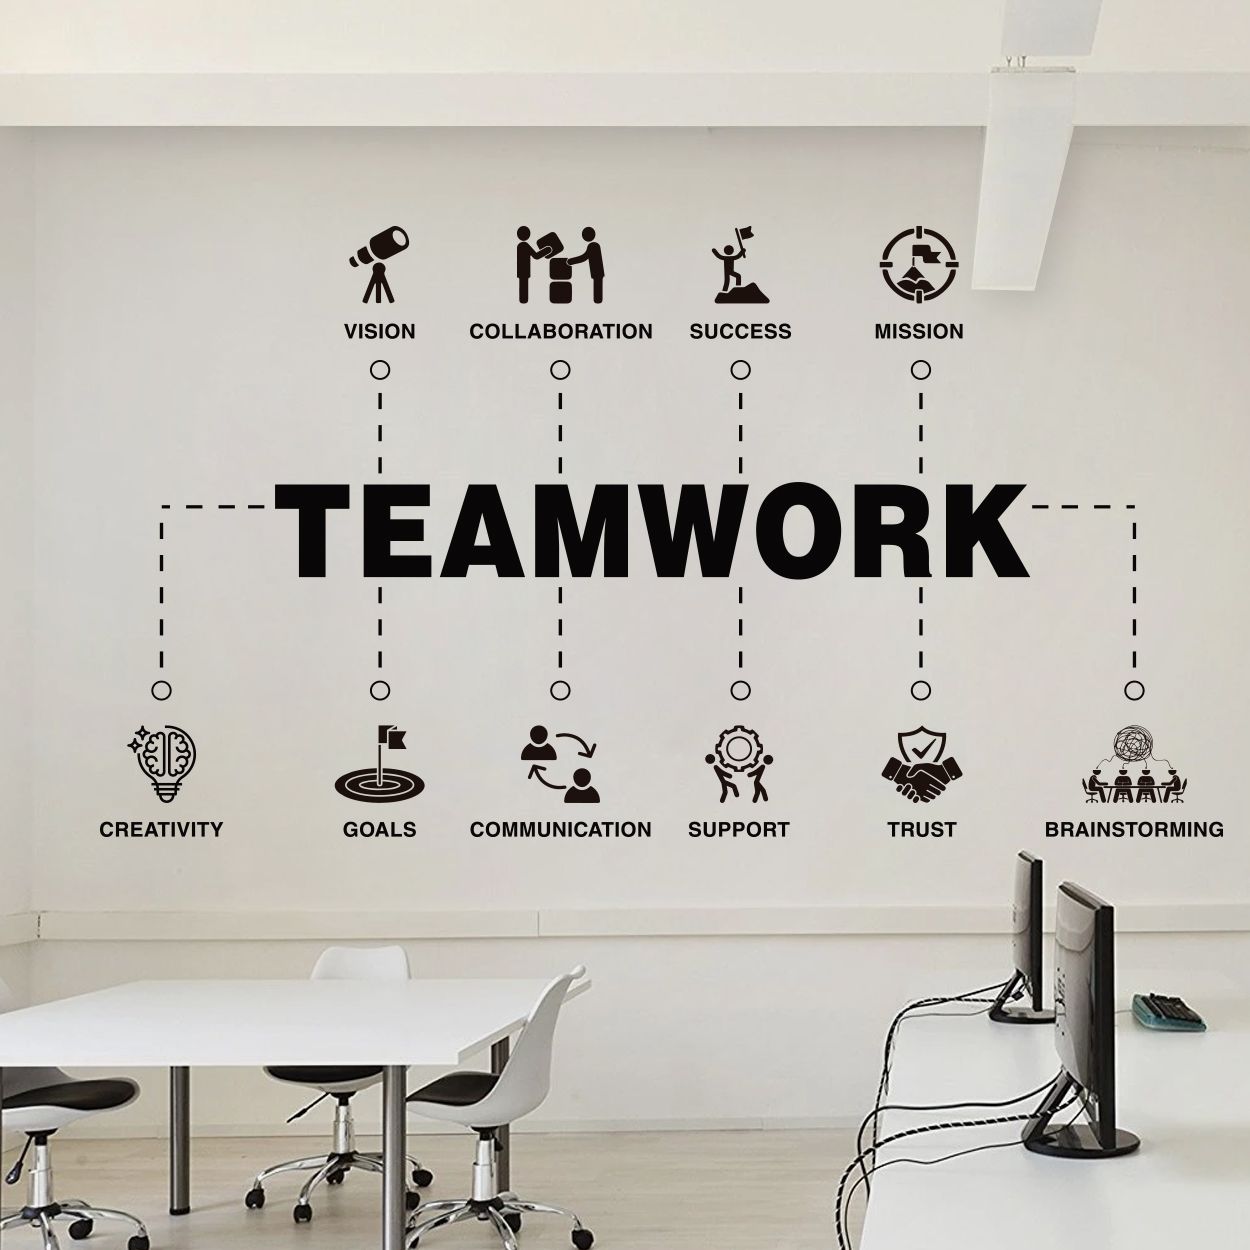 https://kuarki.com/wp-content/uploads/2020/03/Teamwork-Values-Office-Decor.jpg